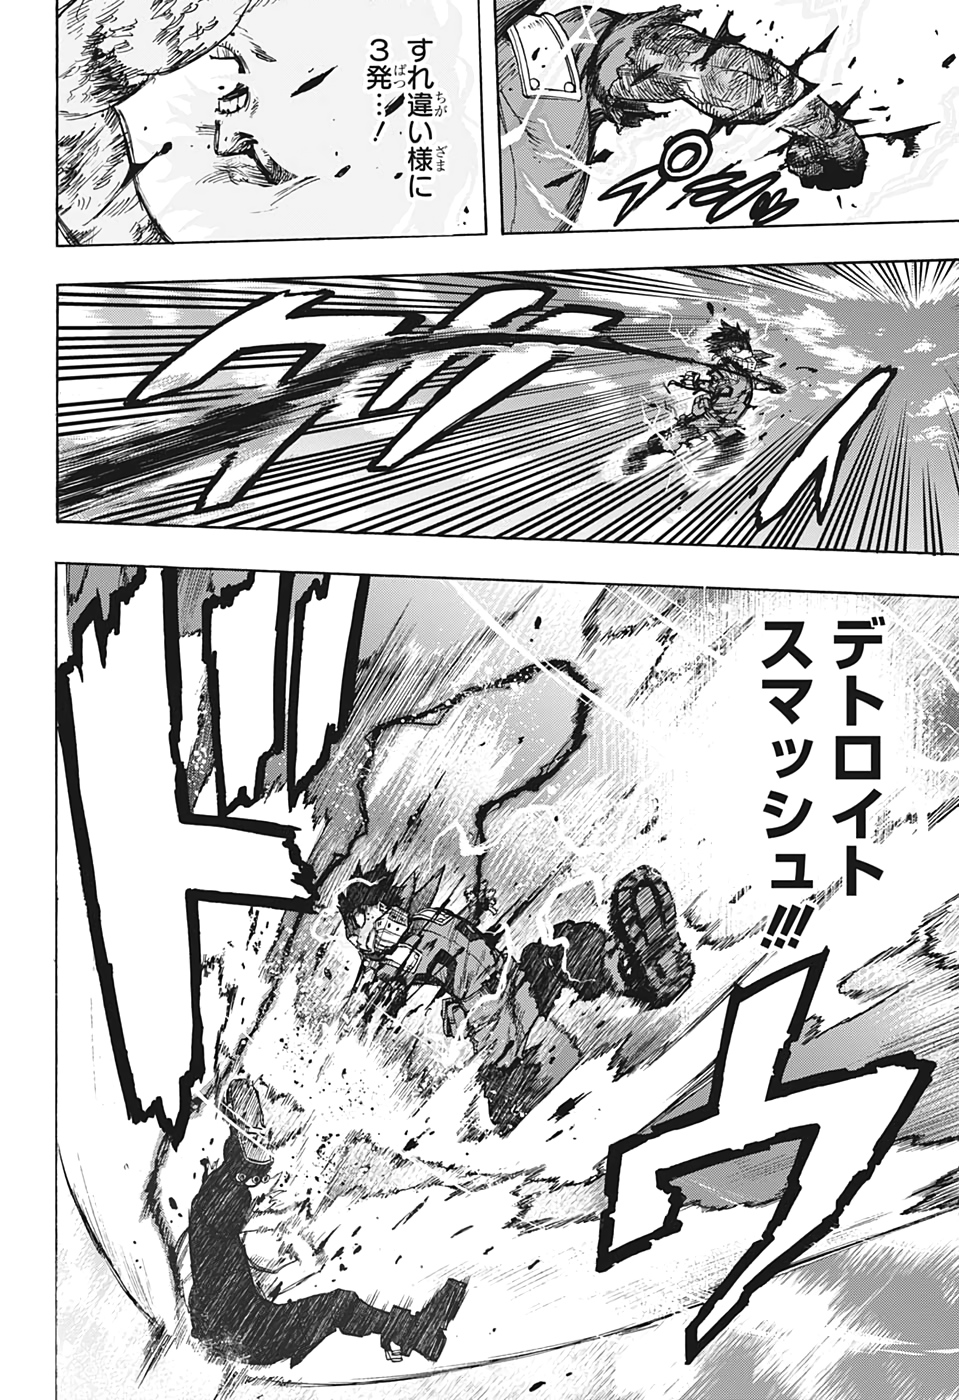 Boku no Hero Academia - Chapter 285 - Page 2